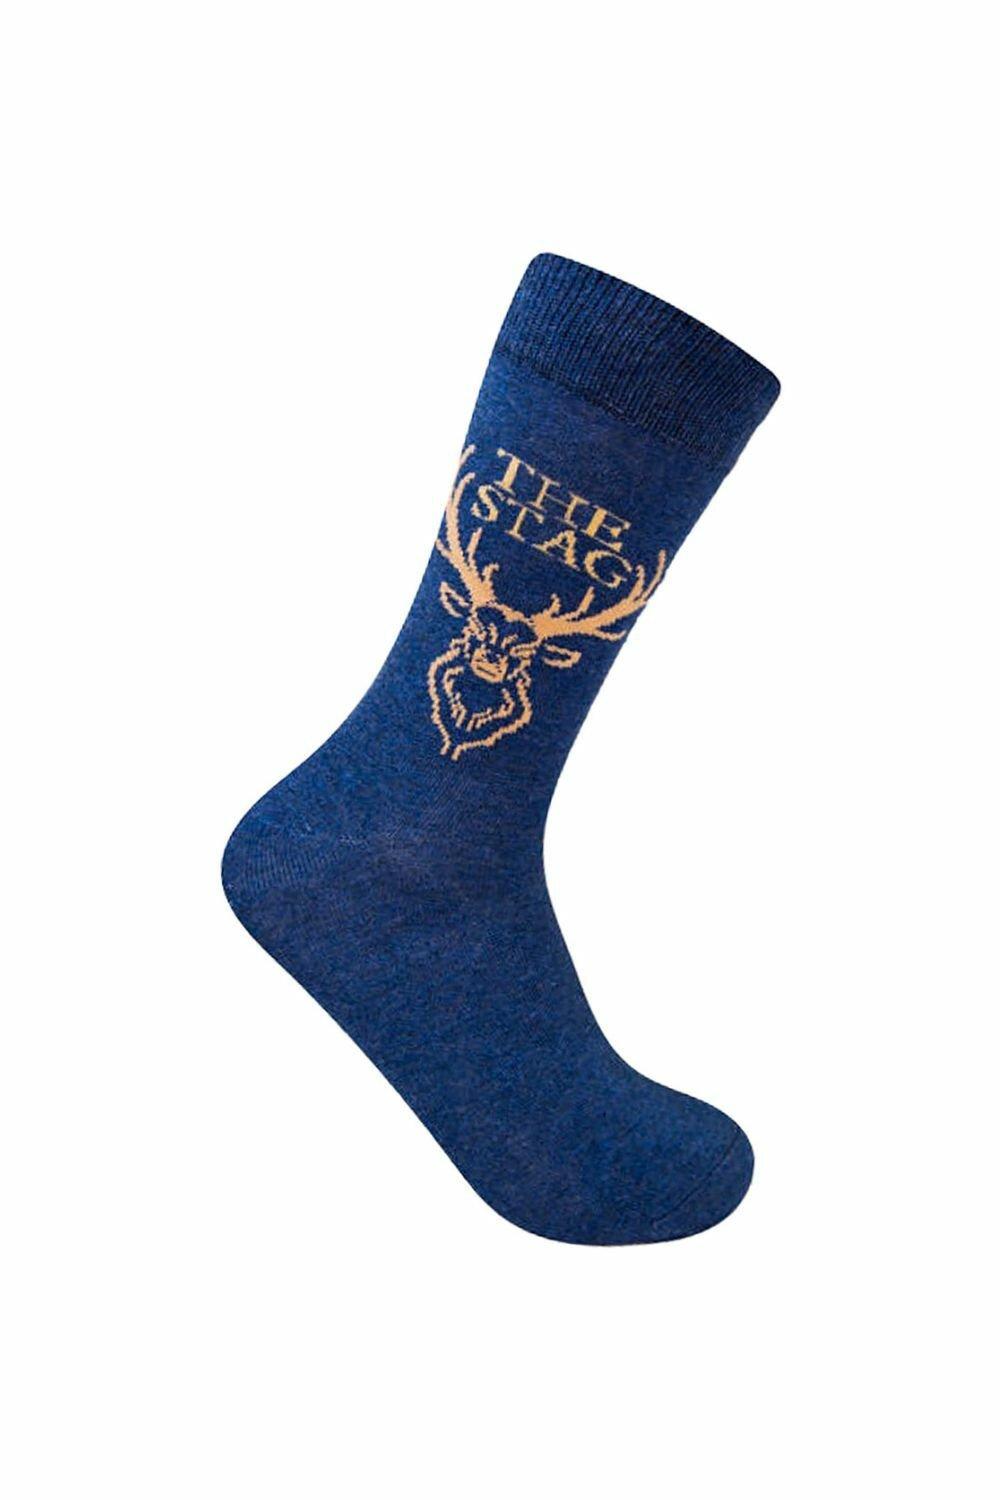 Stag Do Breathable Funny Design Novelty Gift Socks